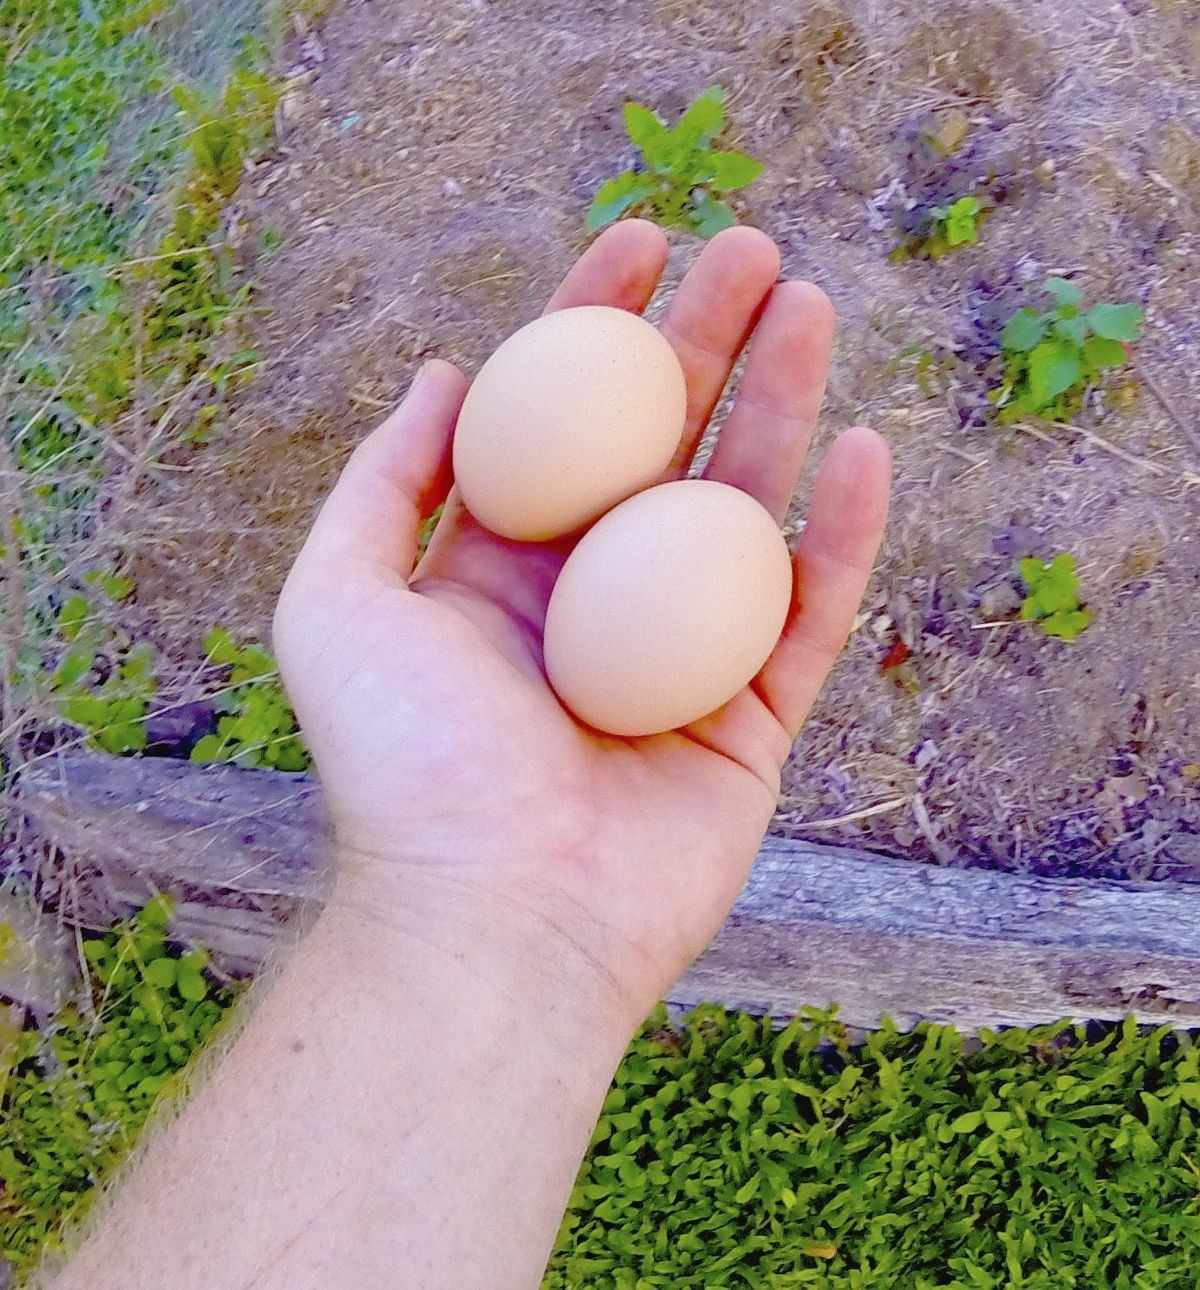 Rotten eggs: Farmer told fertilizer stinks